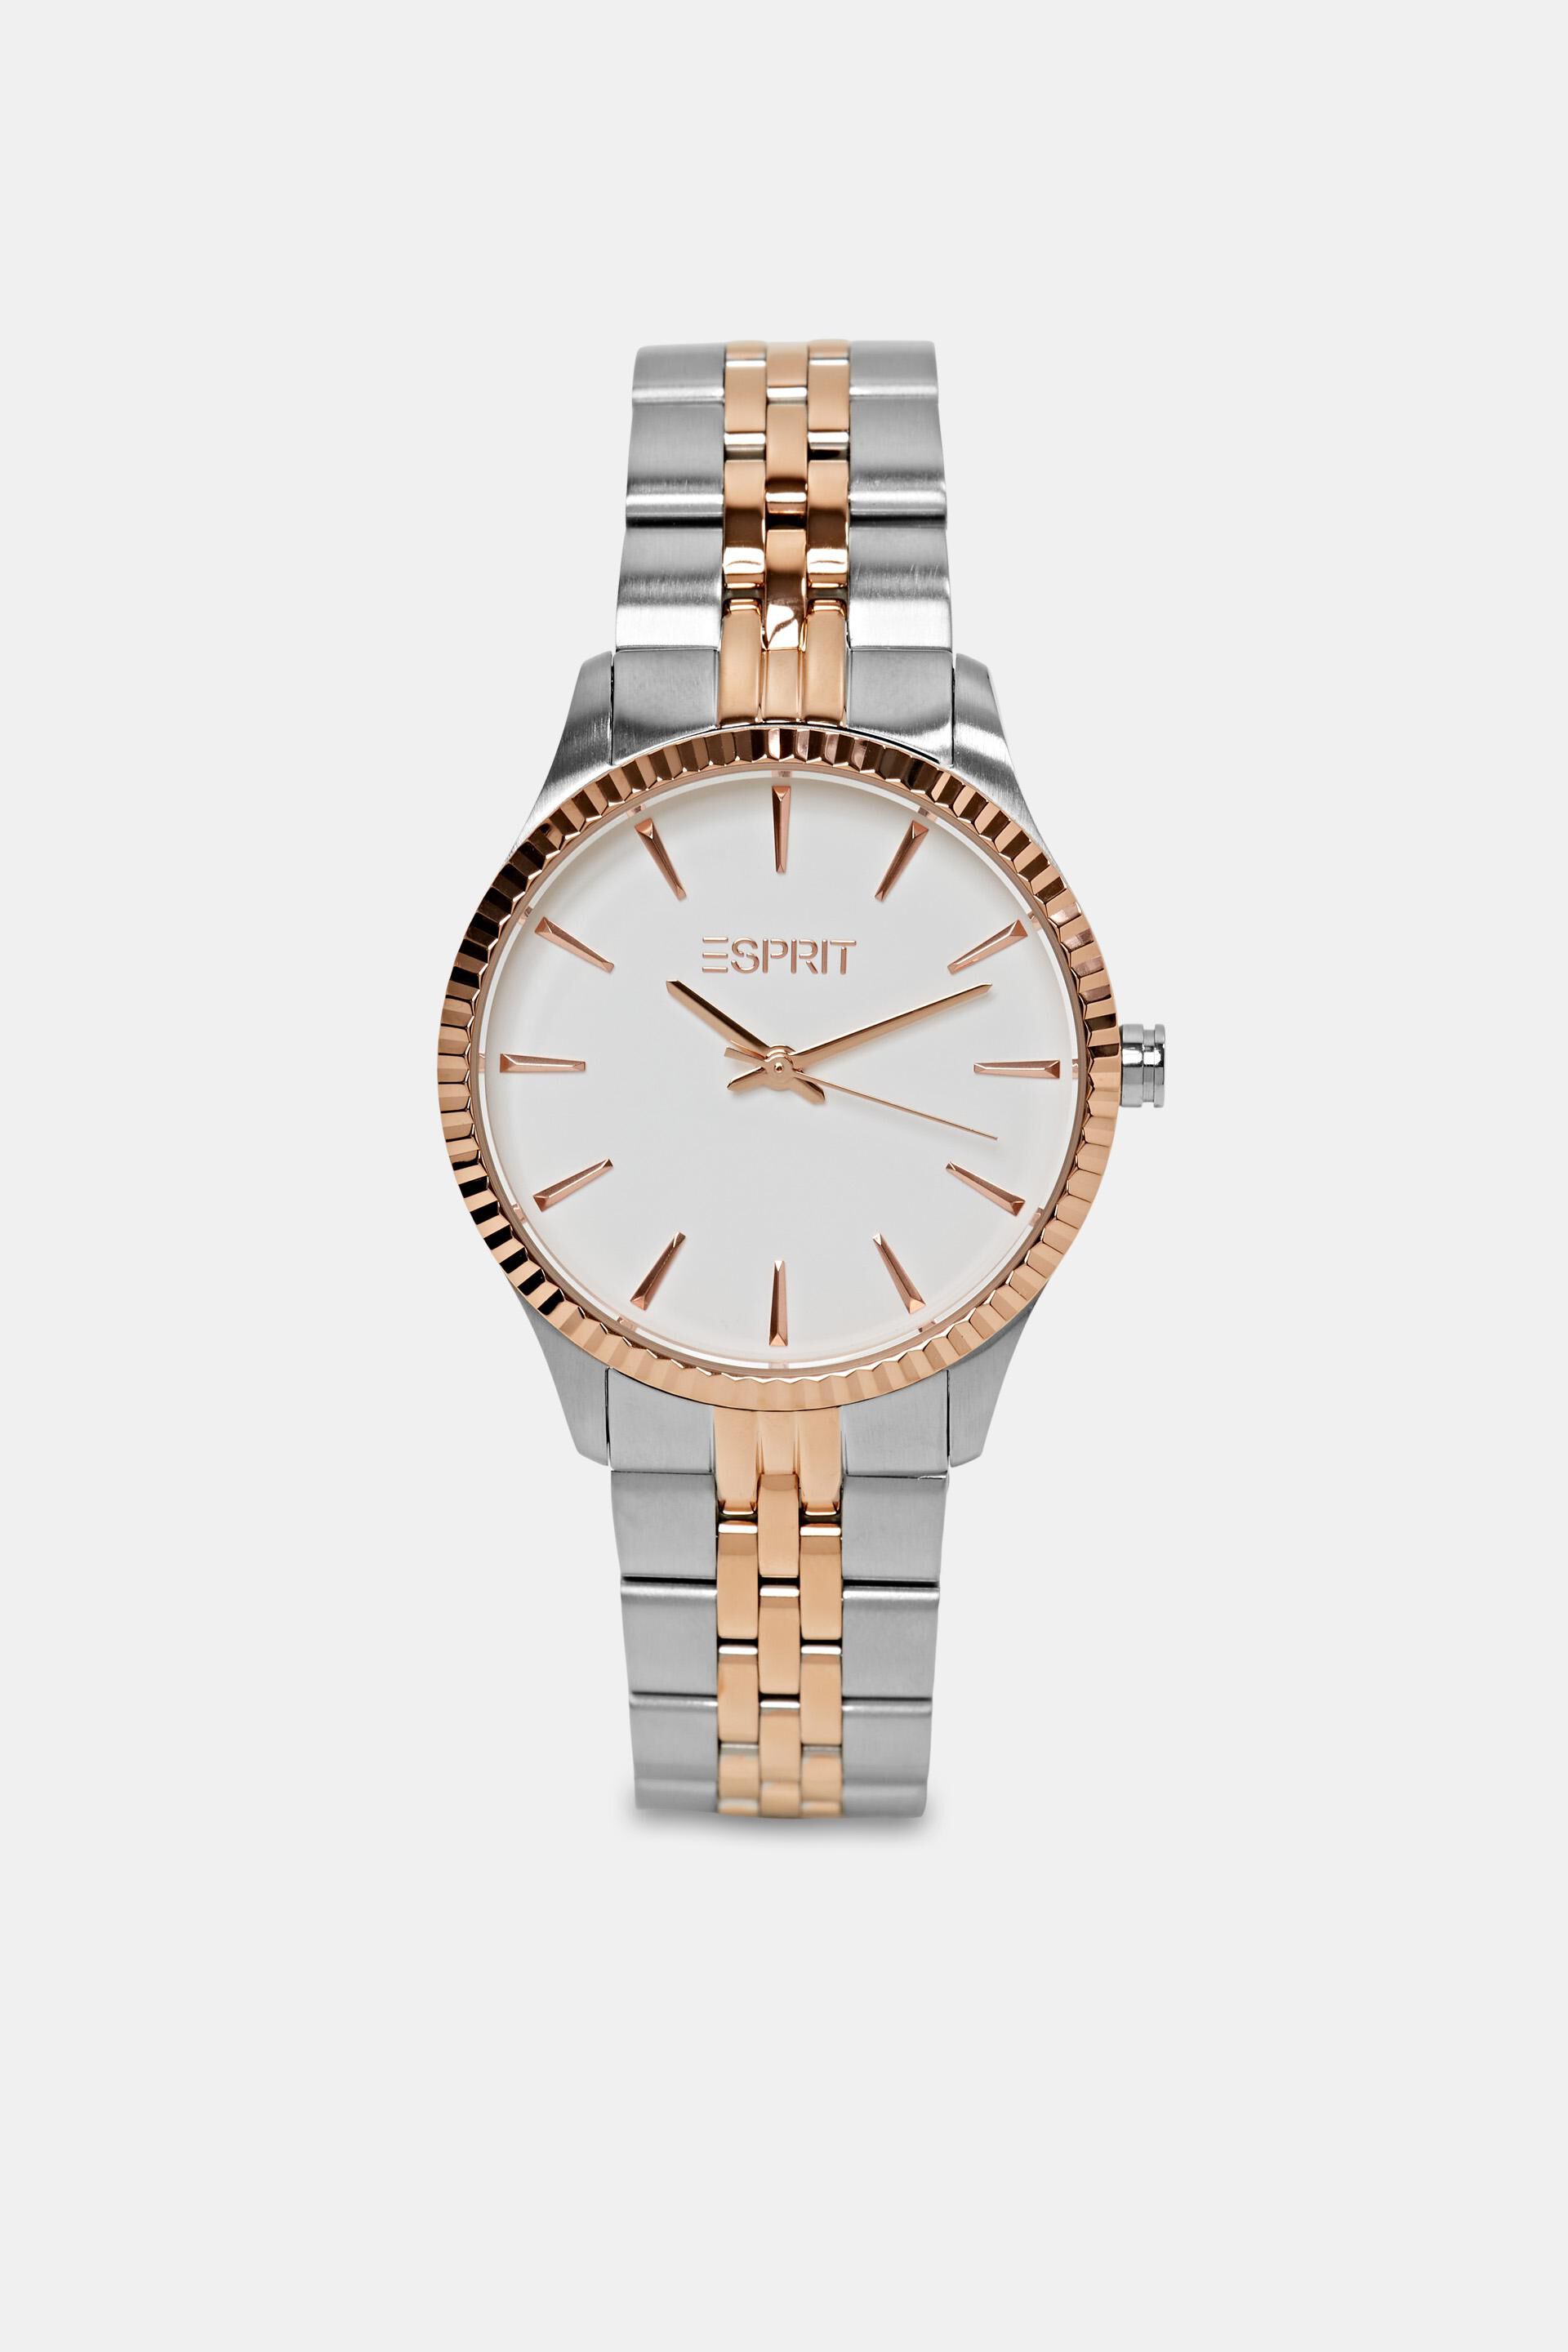 Esprit Online Store Bi-colour watch with a corrugated bezel